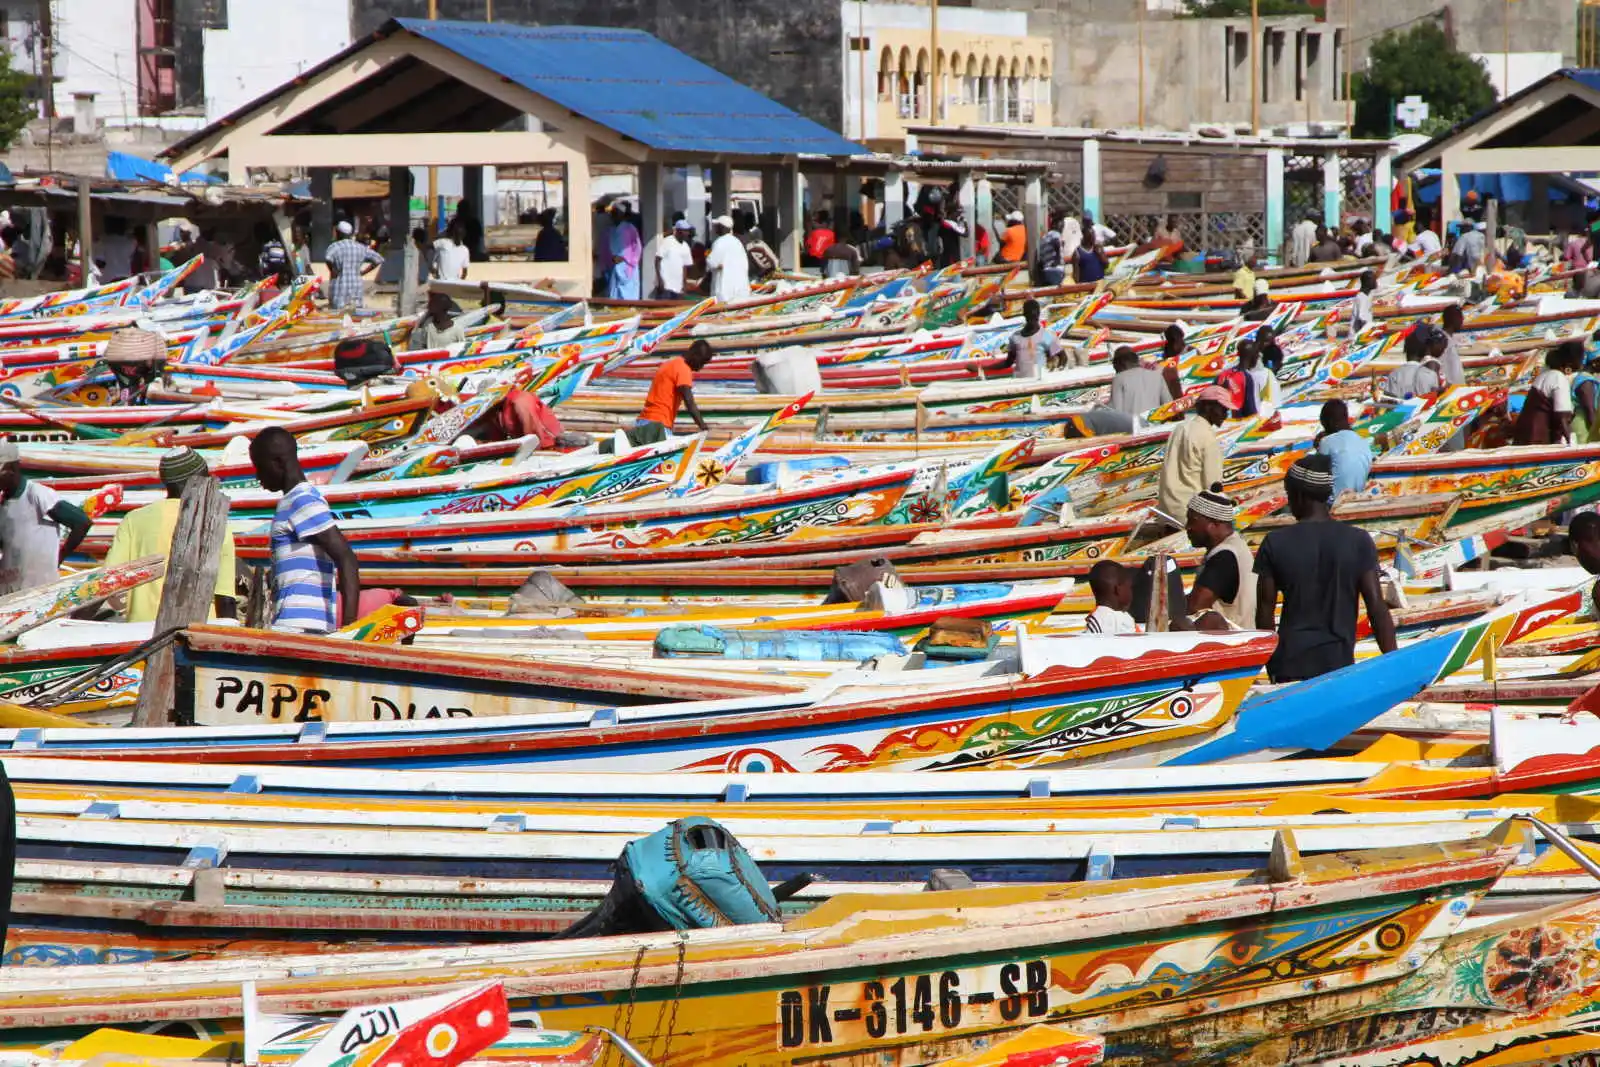 Marché au poissons, Soumbedioune, Dakar, Sénégal